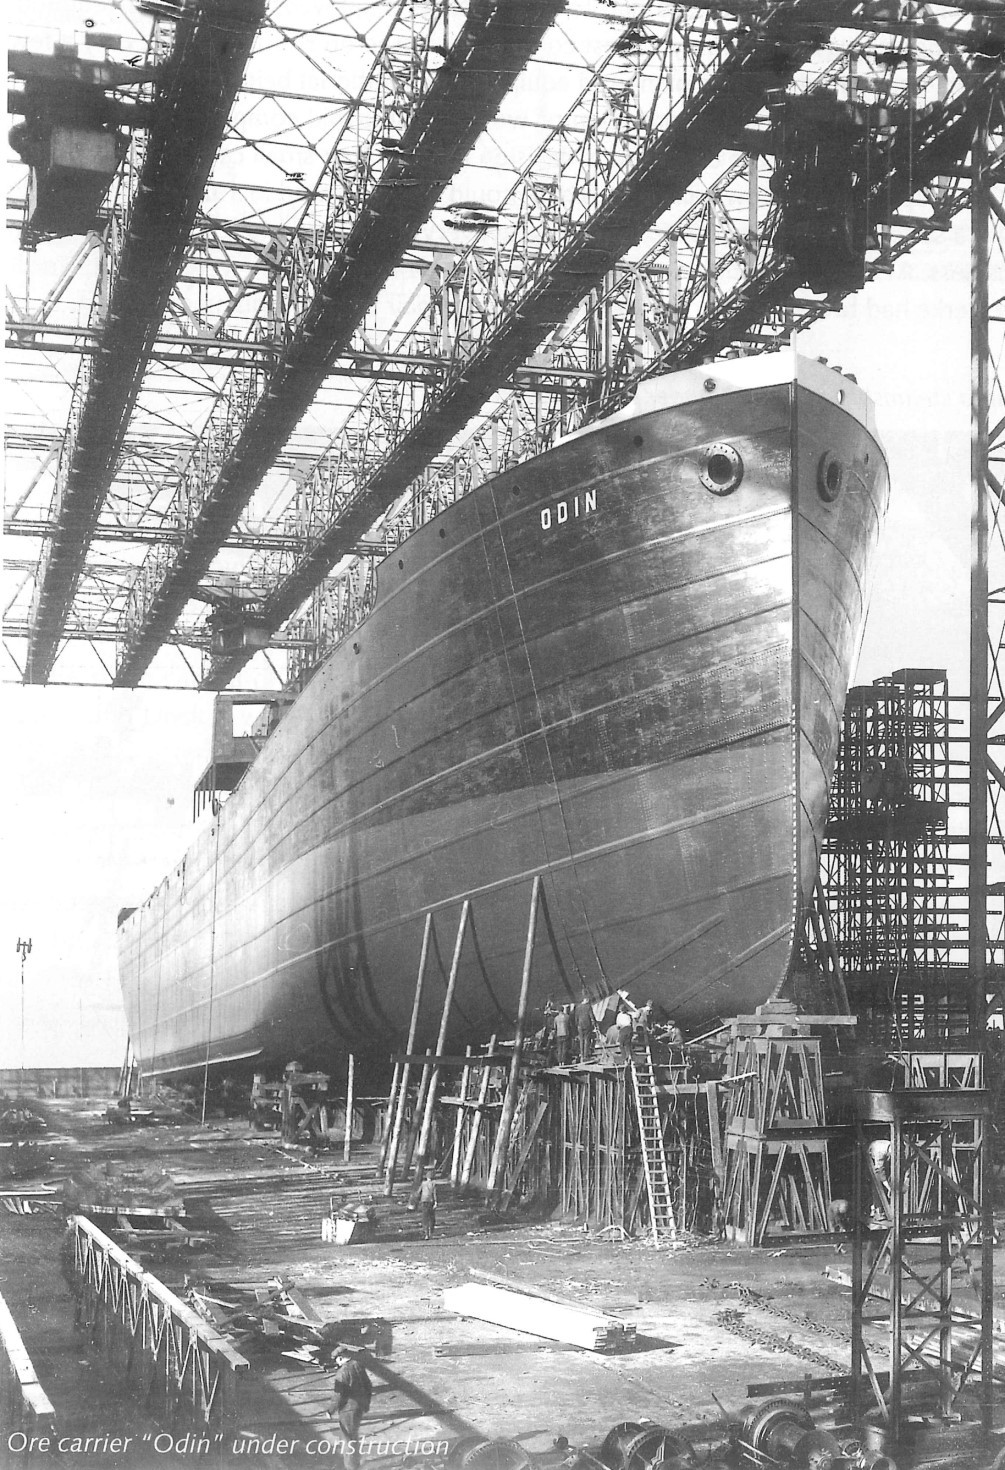 The 5,800-ton cargo ship Odin nearing completion on Slip II of Nordseewerke shipyard, Emden, Germany, 1929